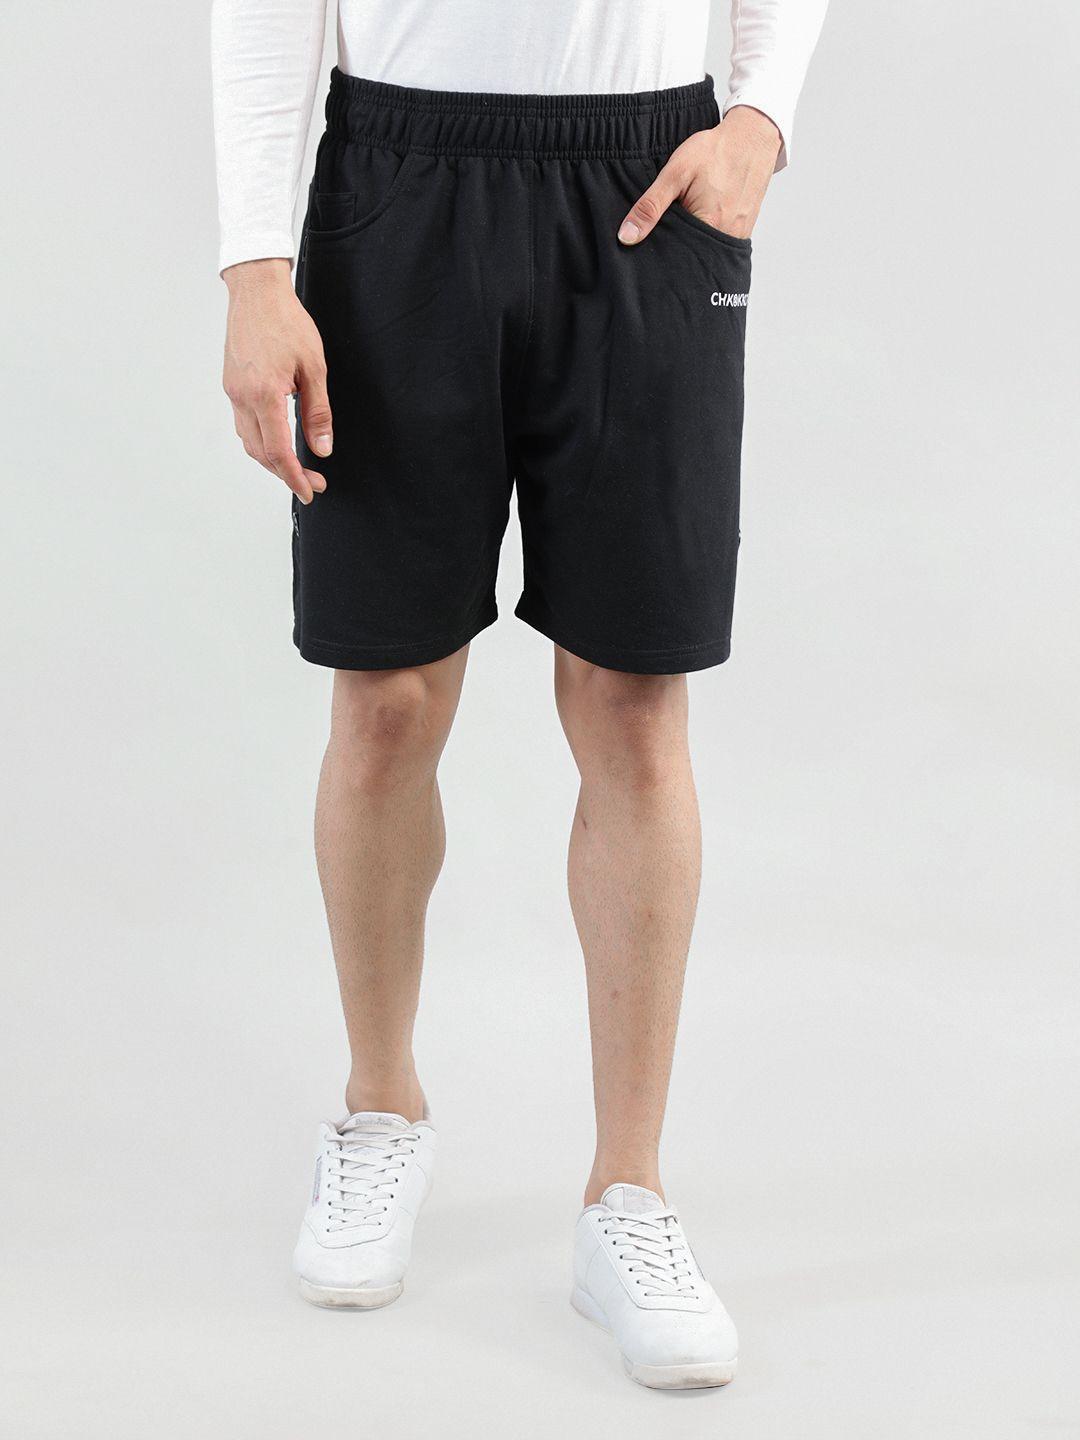 chkokko-men-black-outdoor-sports-shorts